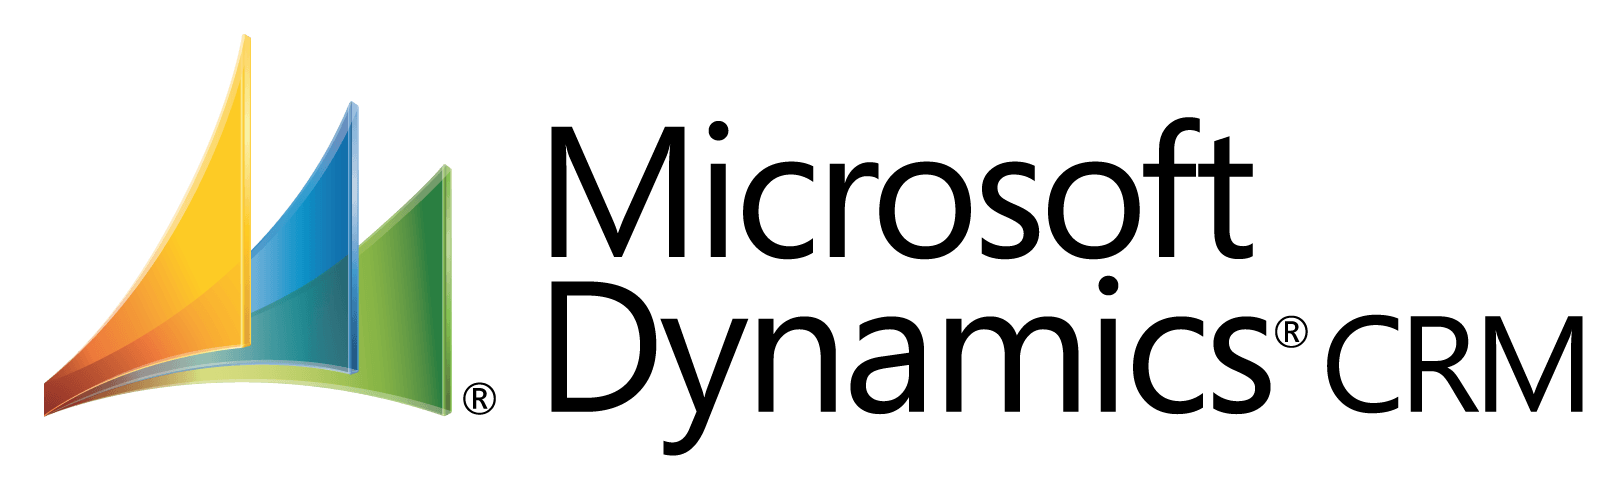 Dynamics CRM 2015 Logo - Image - Dynamics-crm.png | Logopedia | FANDOM powered by Wikia